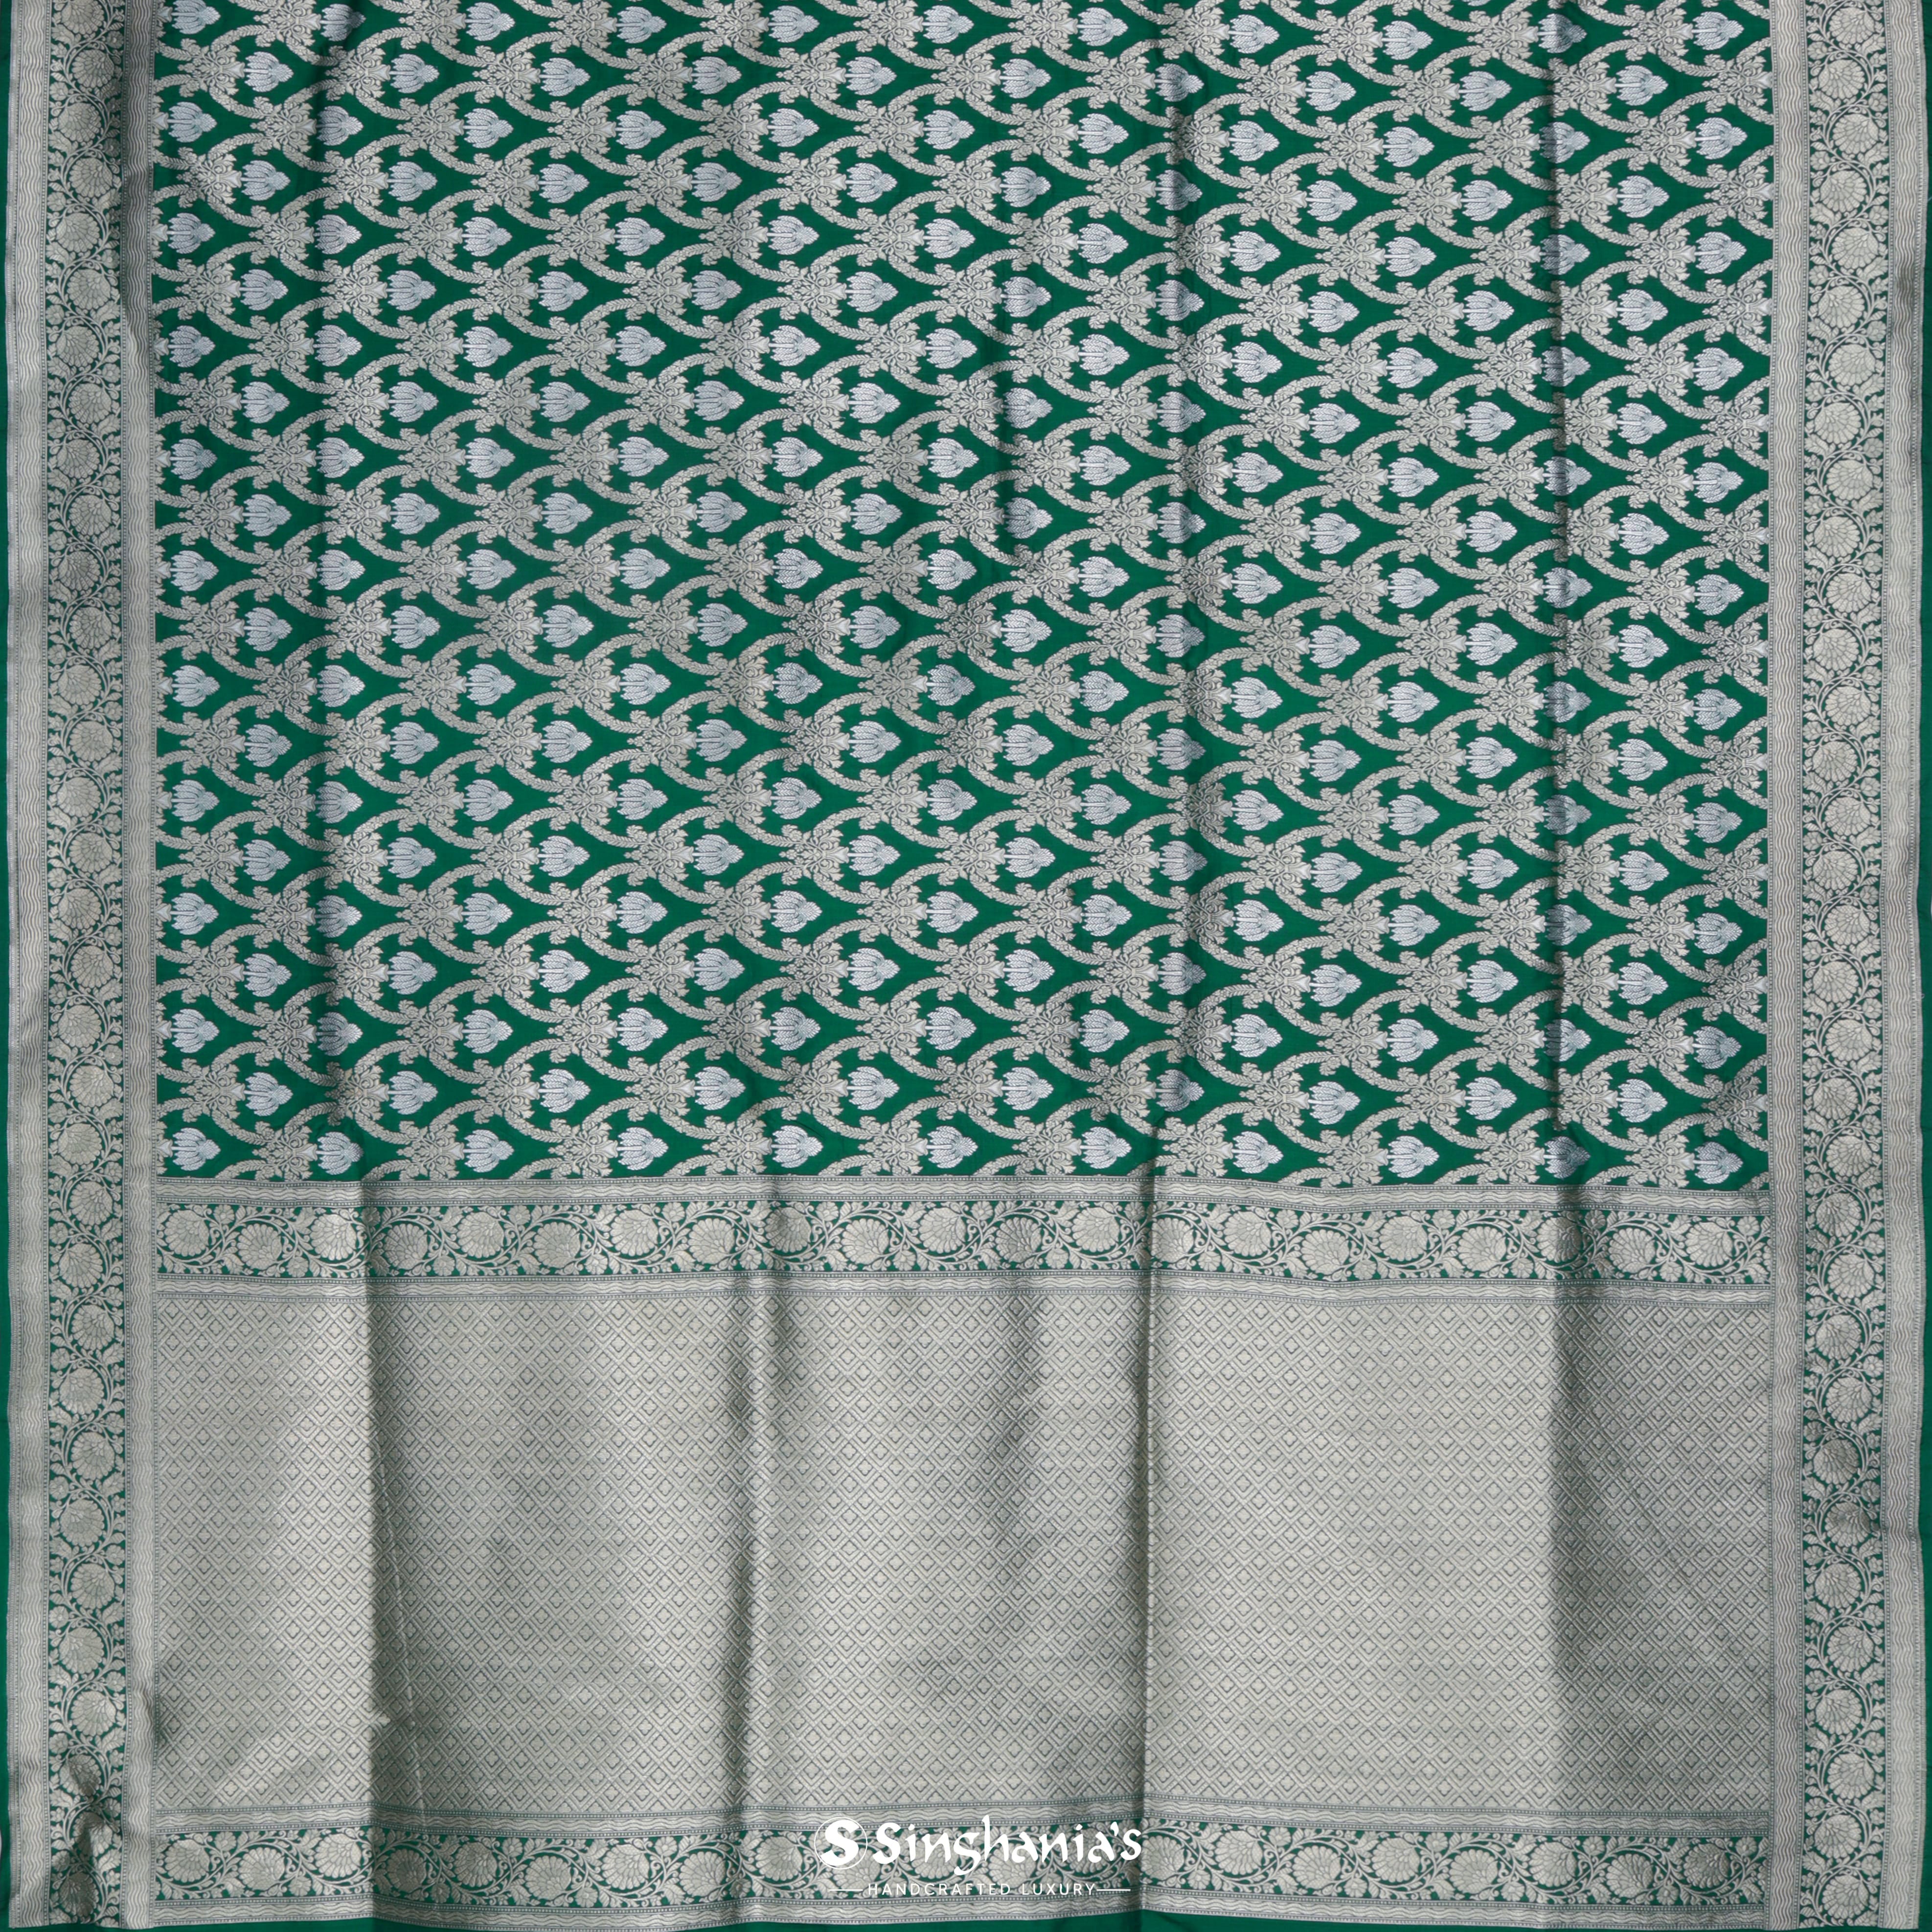 Hunter Green Silk Banarasi Saree With Floral Jaal Pattern